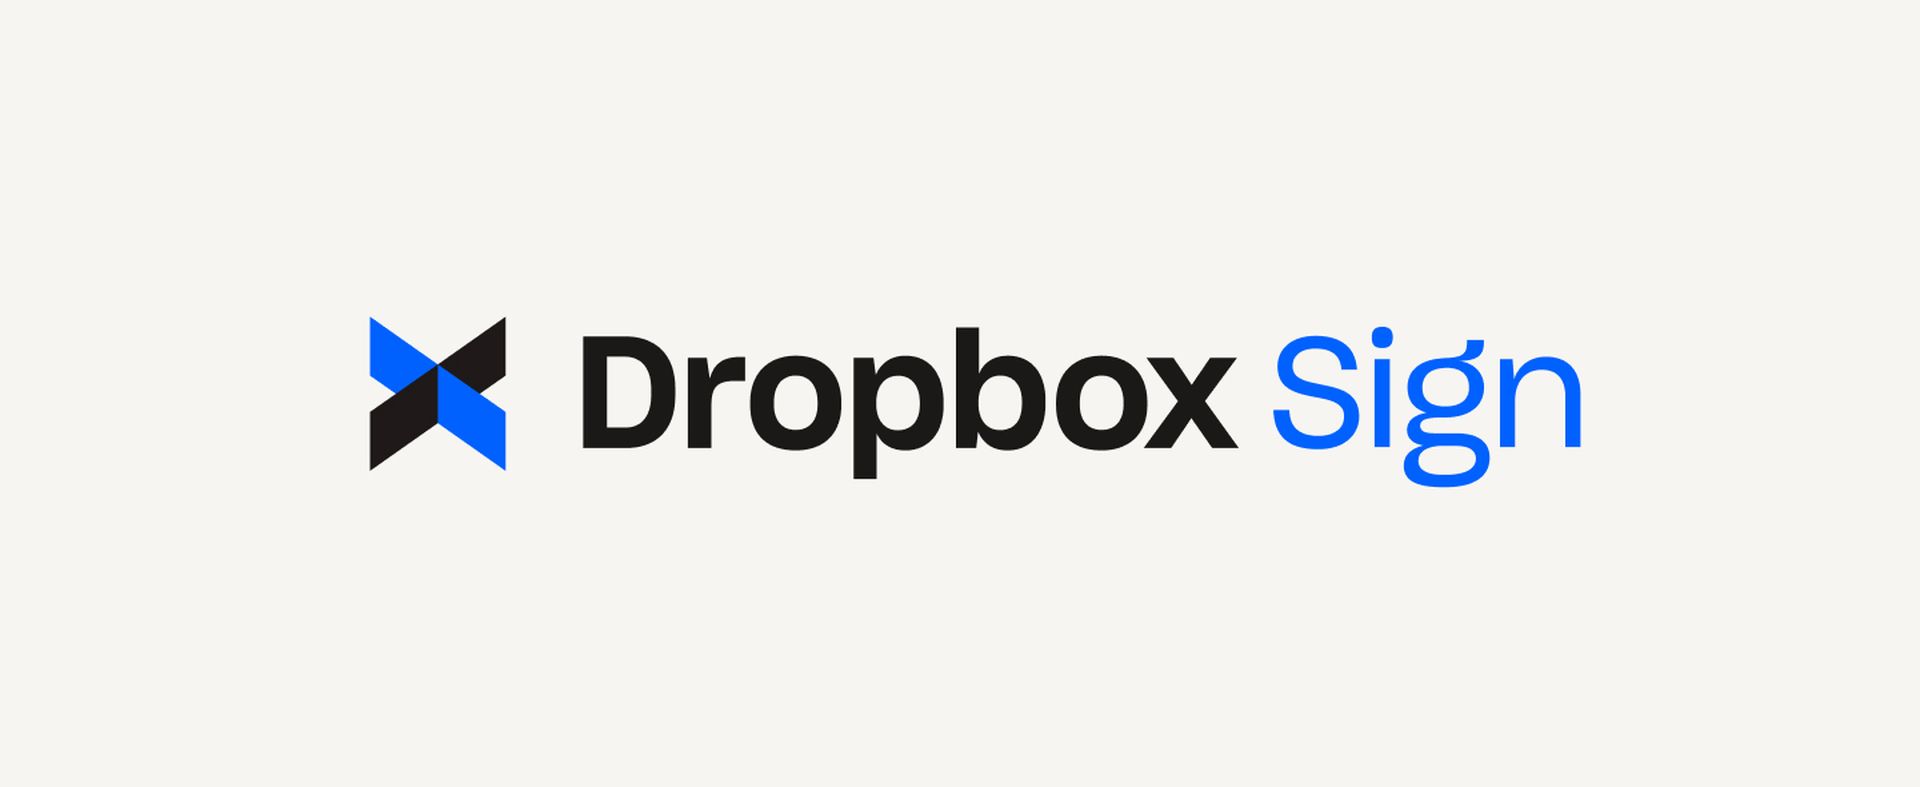 Dropbox Sign 攻击：深入探讨数据安全及其影响